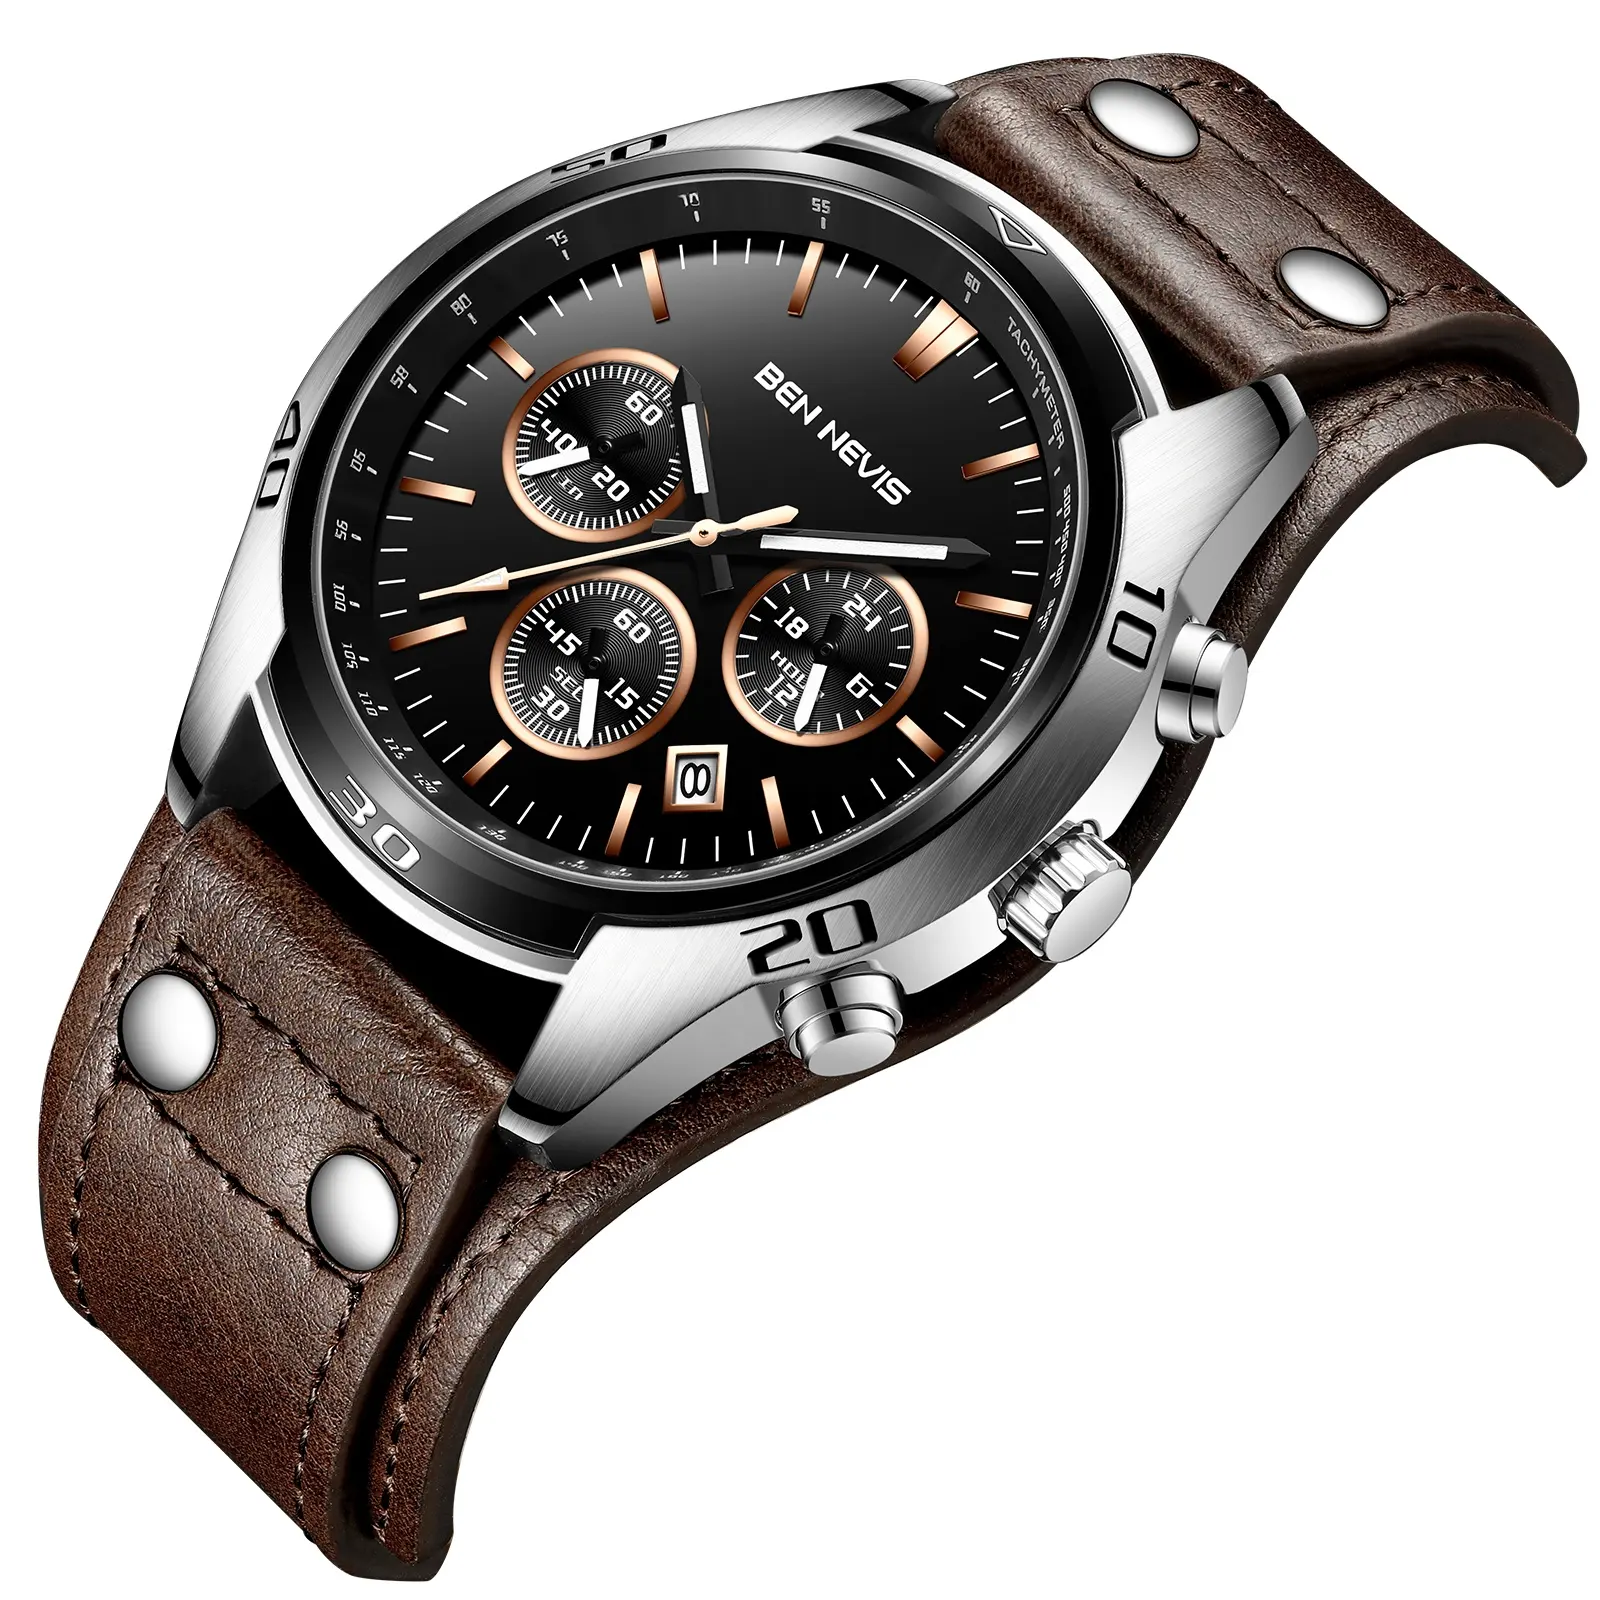 3ATM waterproof Chinese quartz movement timing watch brown leather original watch band fashion man watch6017G